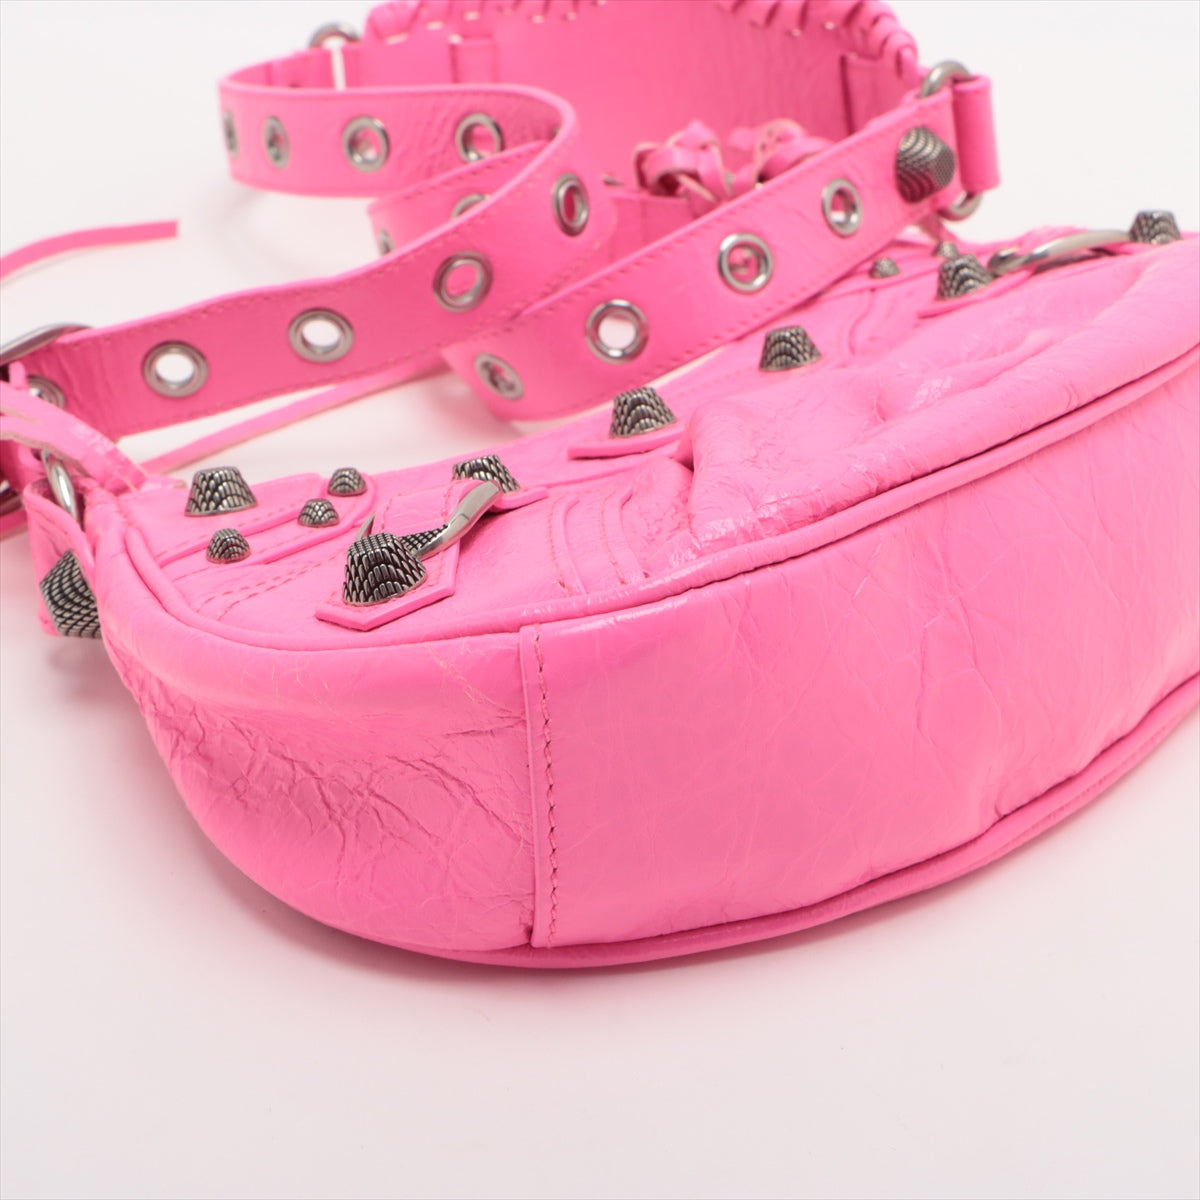 Balenciaga Arena Leather Shoulder bag Pink 671309 With mirror